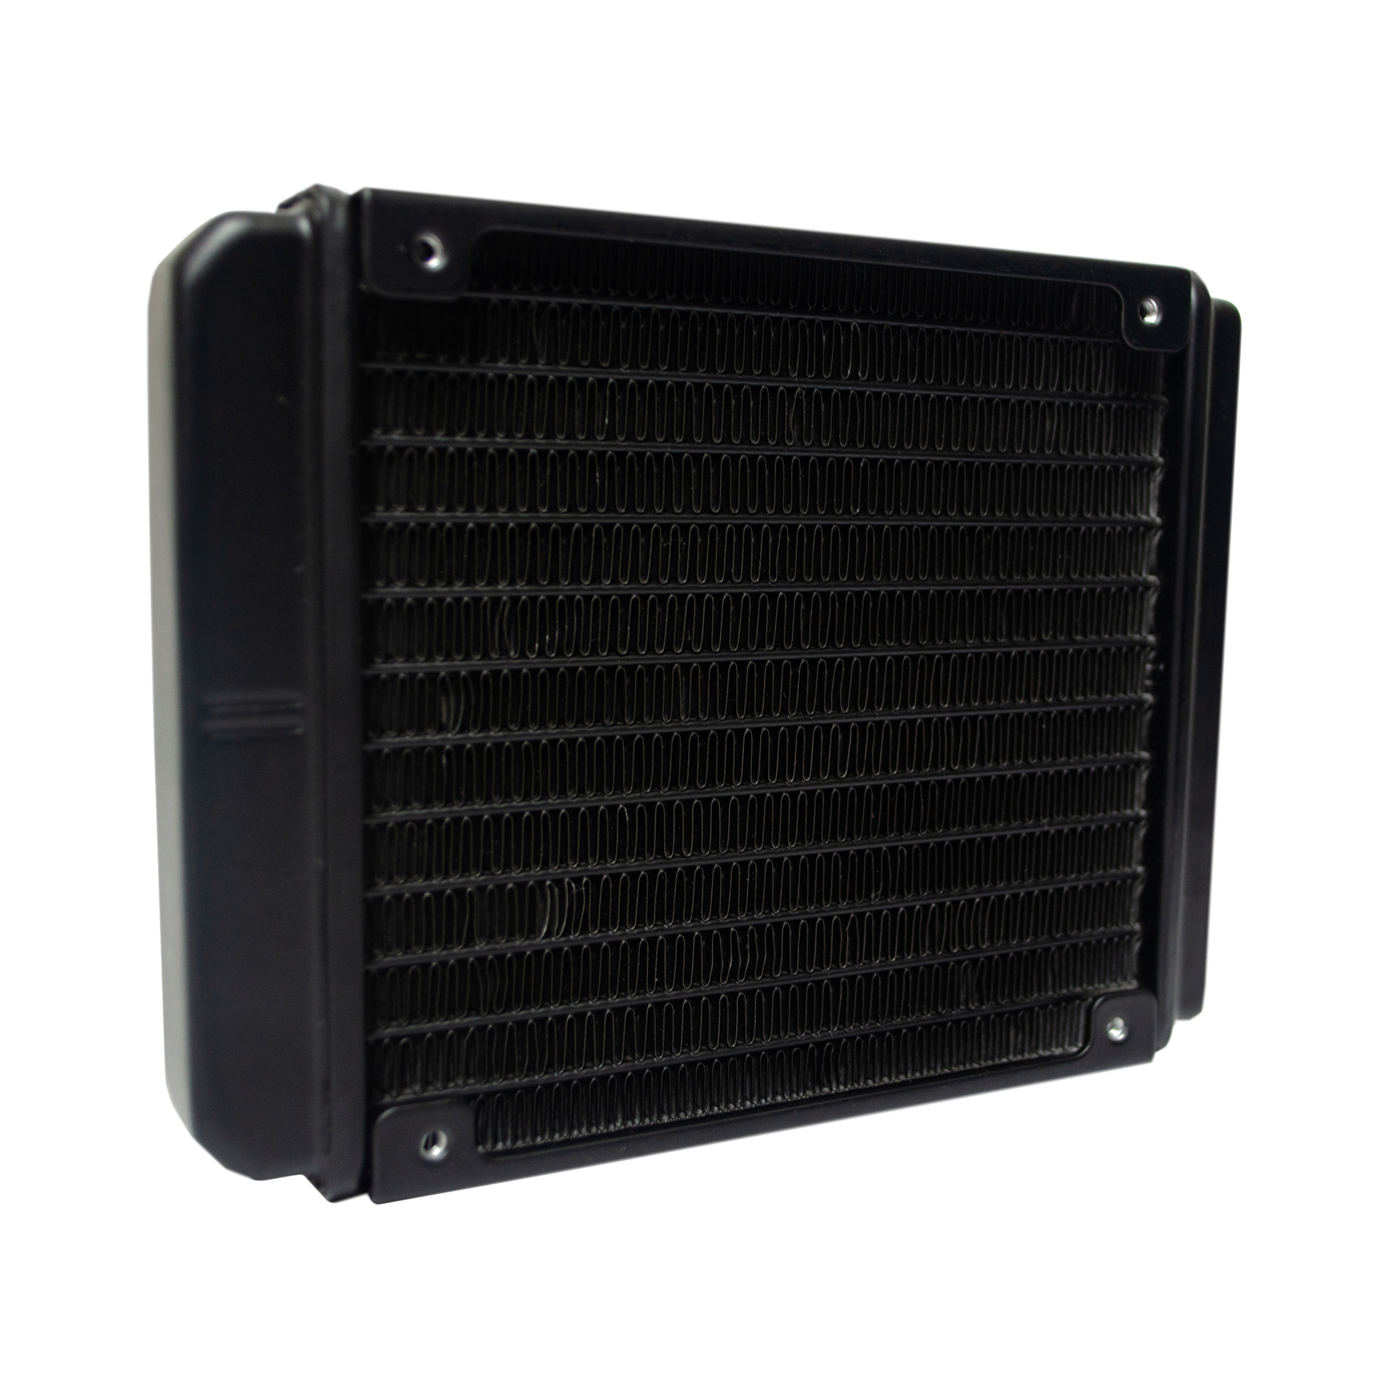 Digifast AIO Notos N12 Liquid CPU Cooler, N12, 120mm Radiator, ARGB Heatsink, Pump and Fans, Sync Lighting for major motherboards